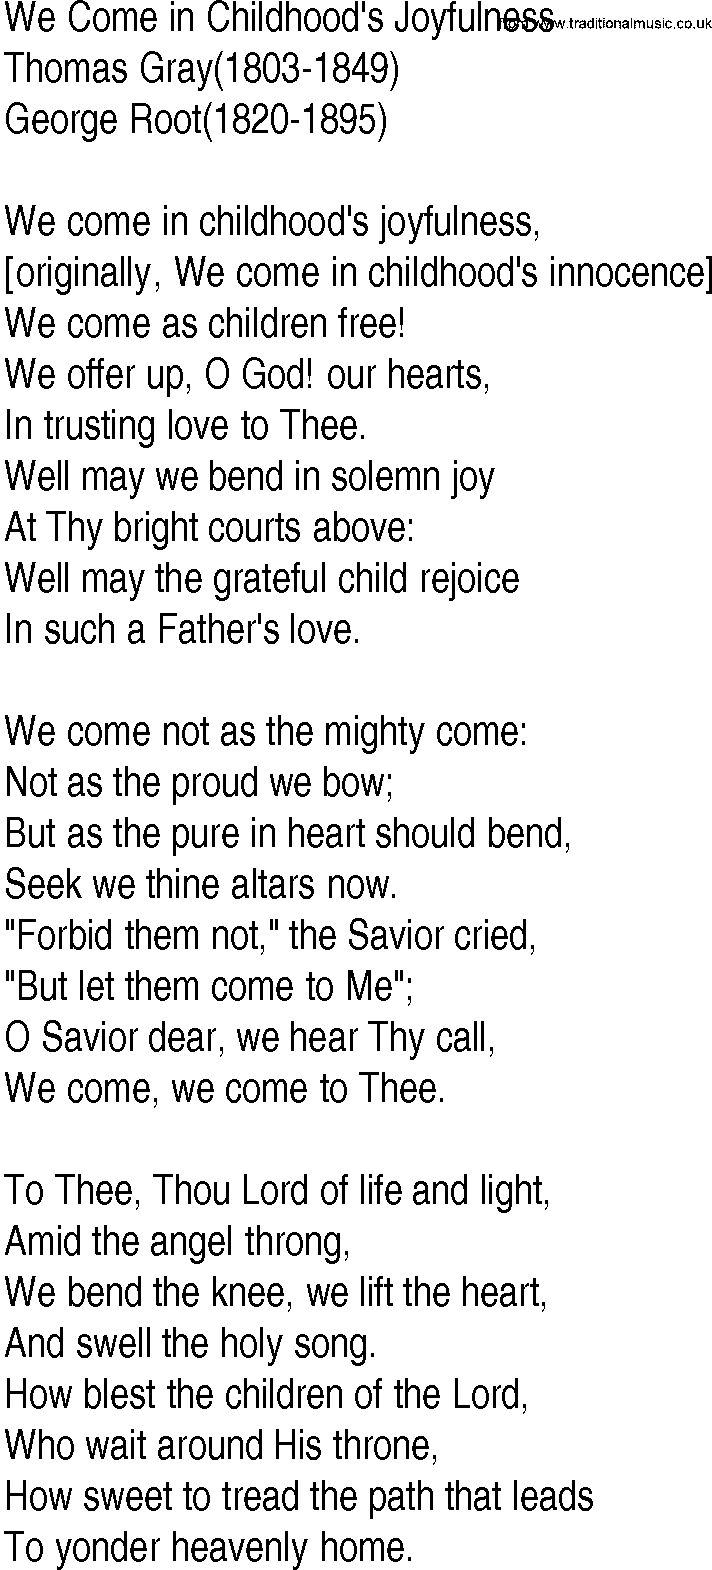 Hymn and Gospel Song: We Come in Childhood's Joyfulness by Thomas Gray lyrics